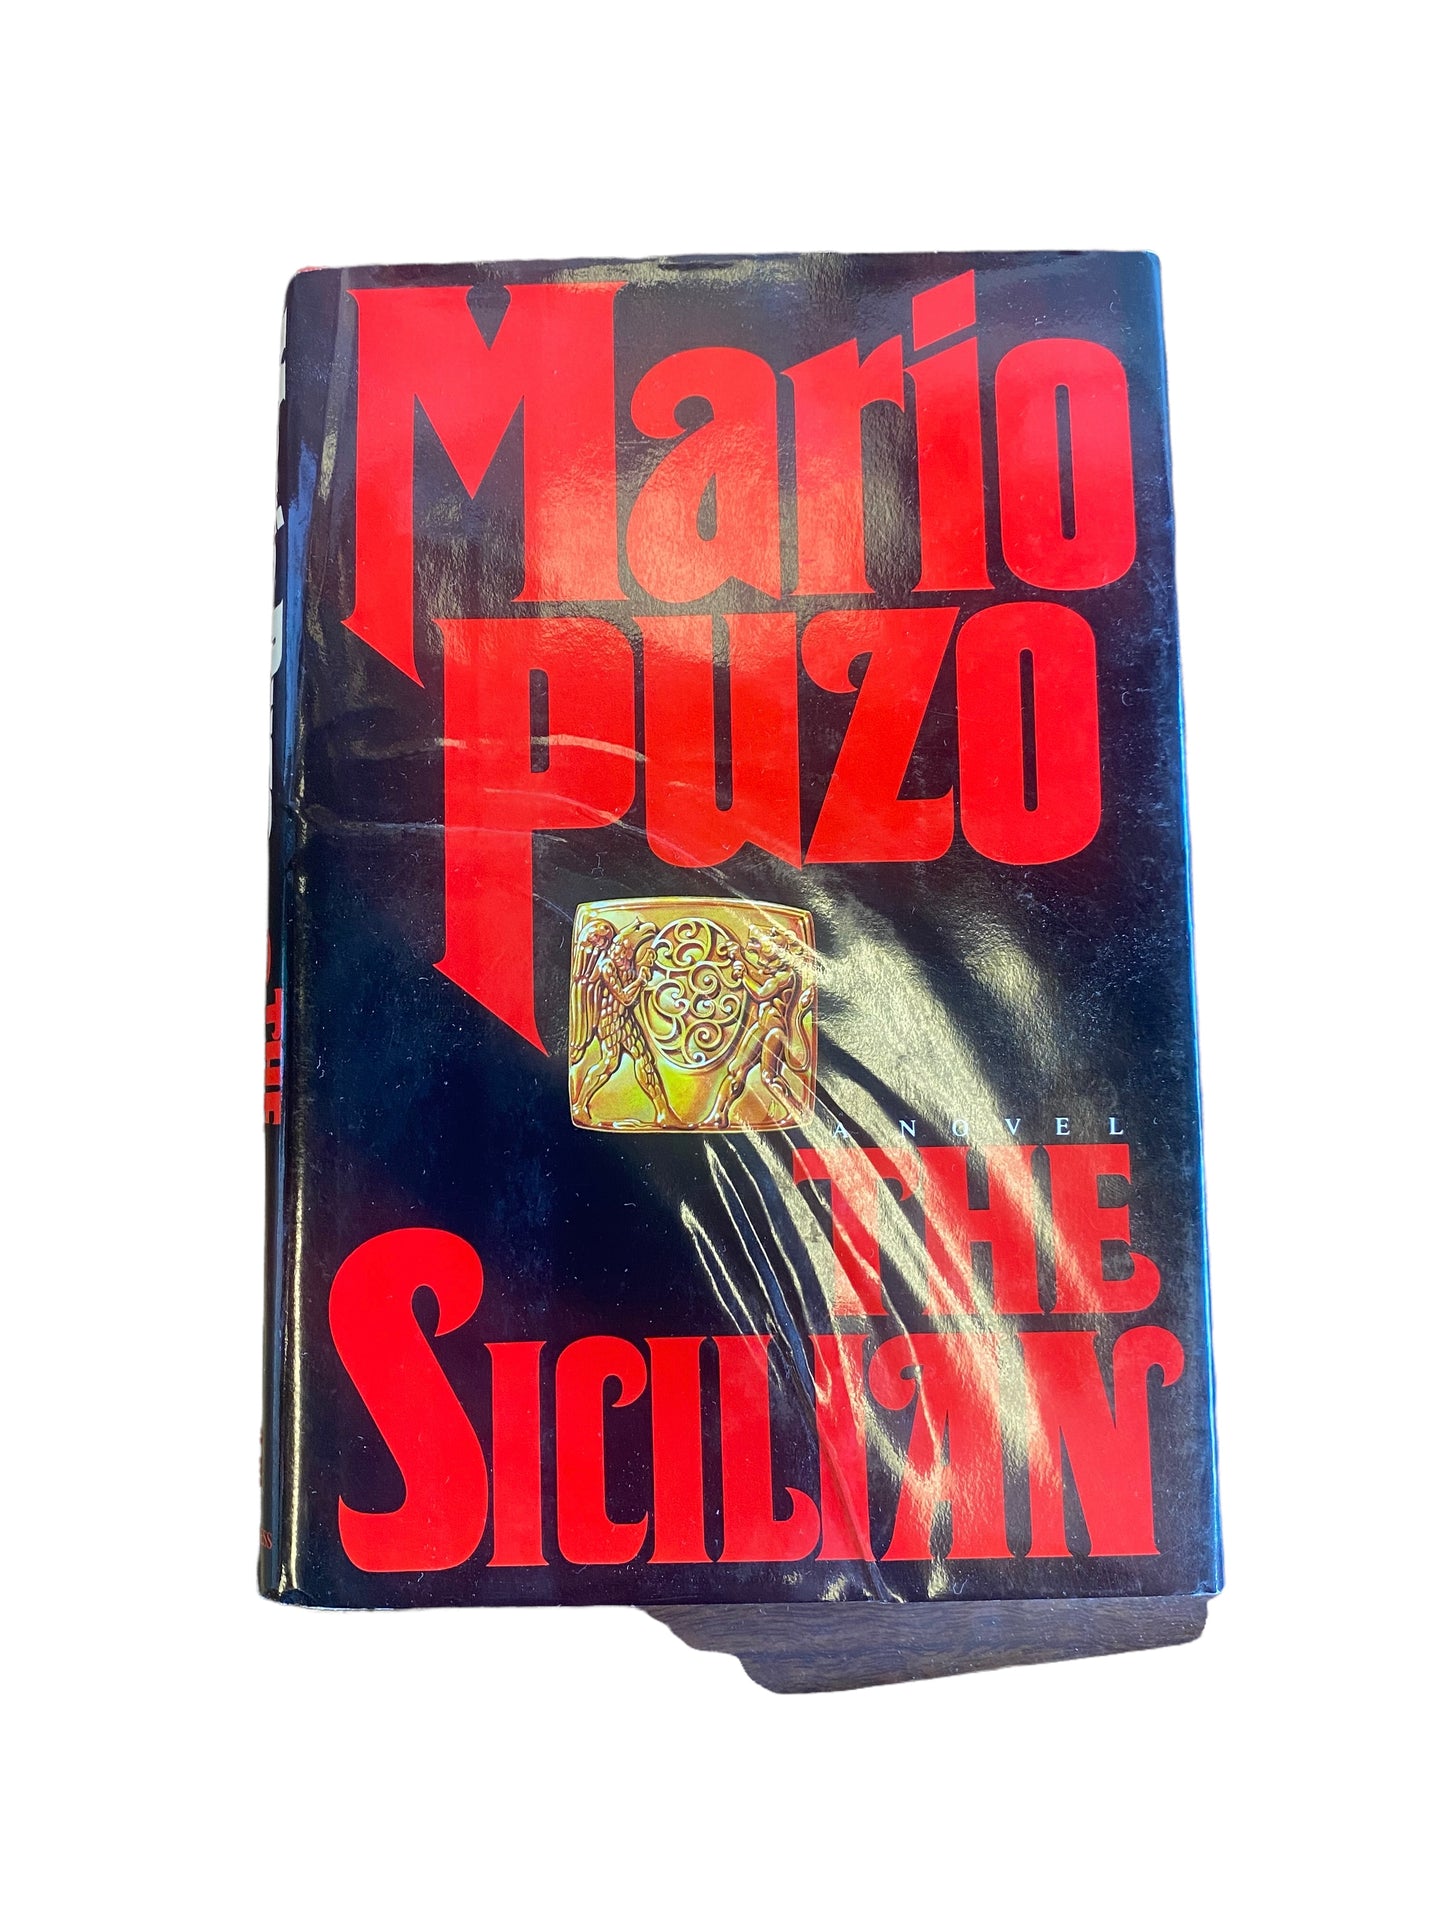 The Sicilian - A Novel, by Mario Puzo